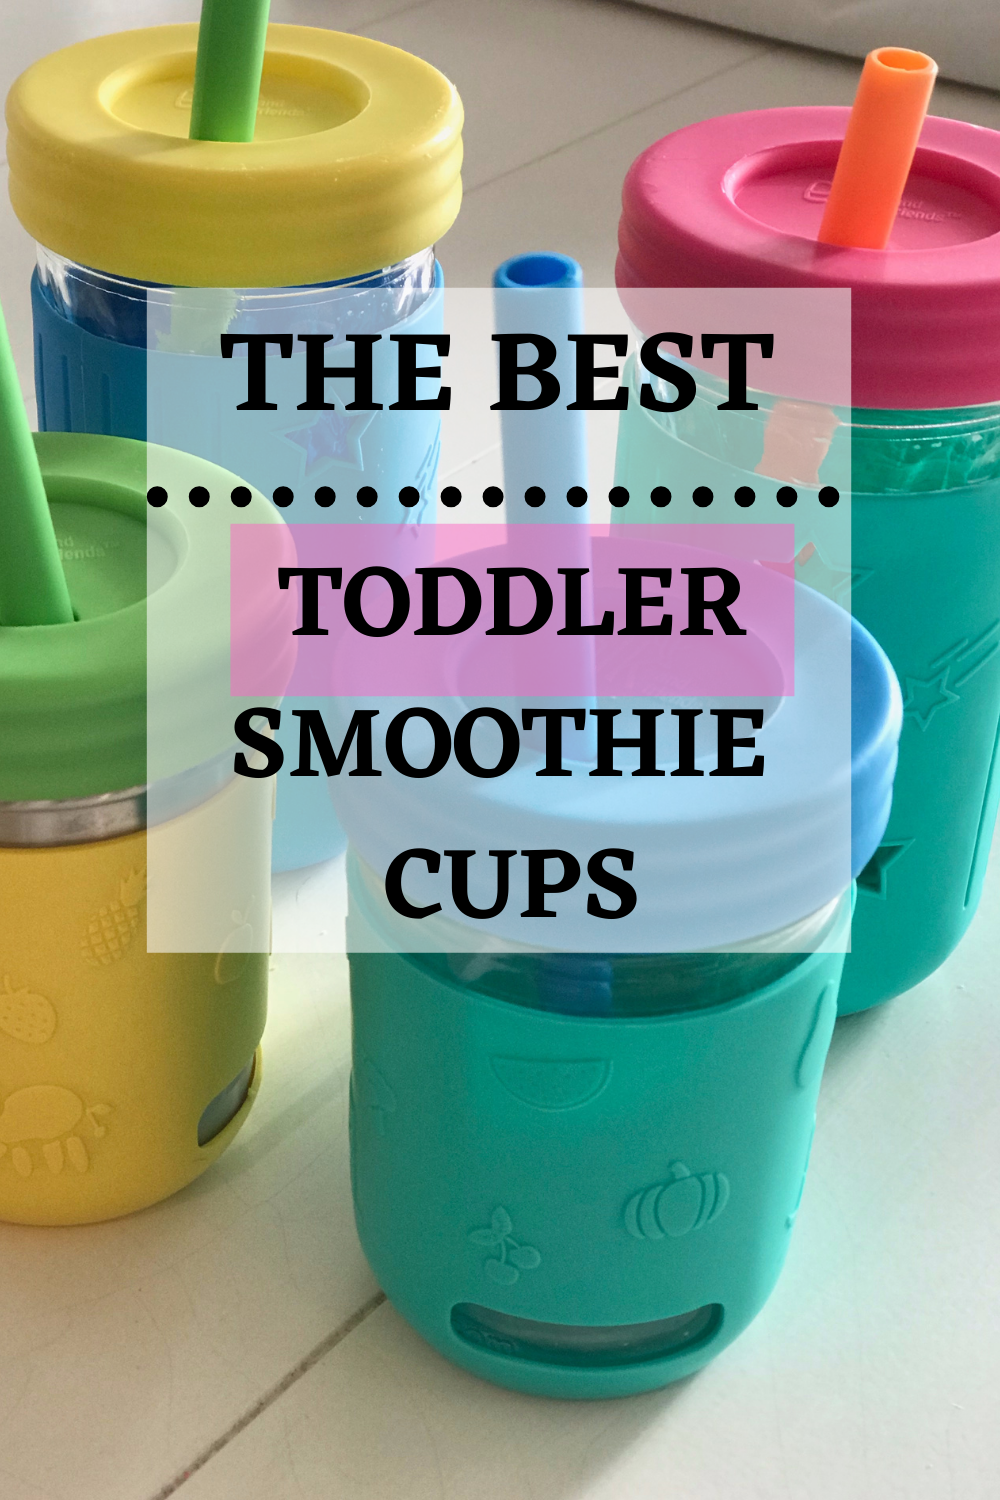 https://laurennicolejones.com/wp-content/uploads/2021/02/The-Best-Toddler-Smoothie-Cups-.png